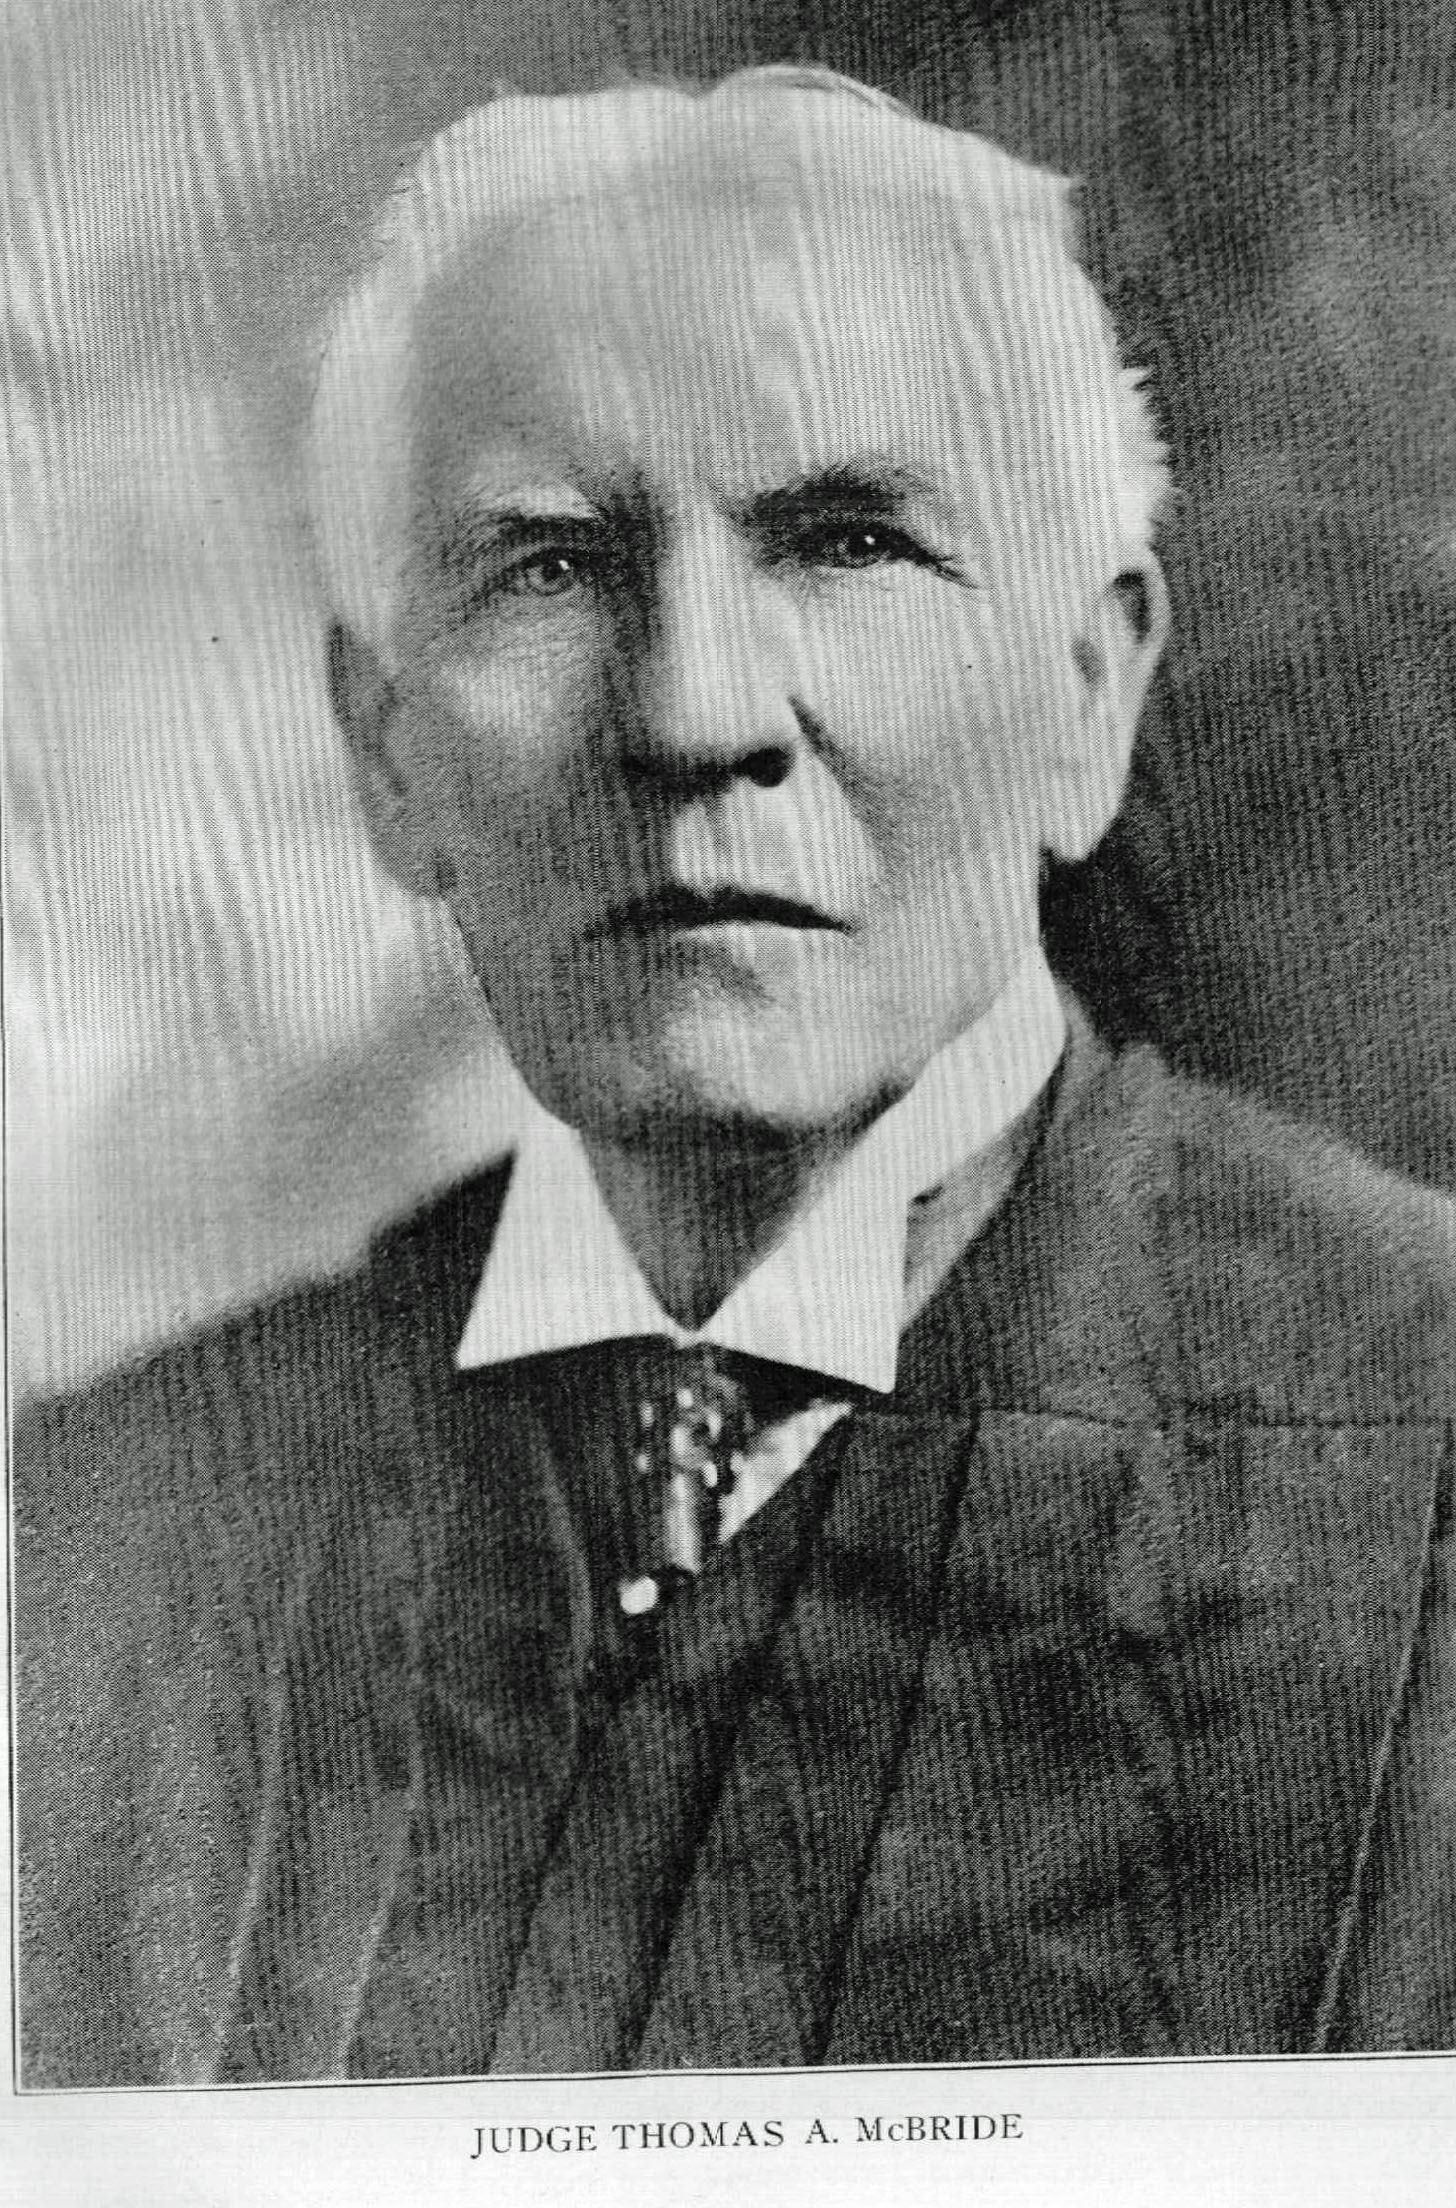 Thomas A. McBride portrait